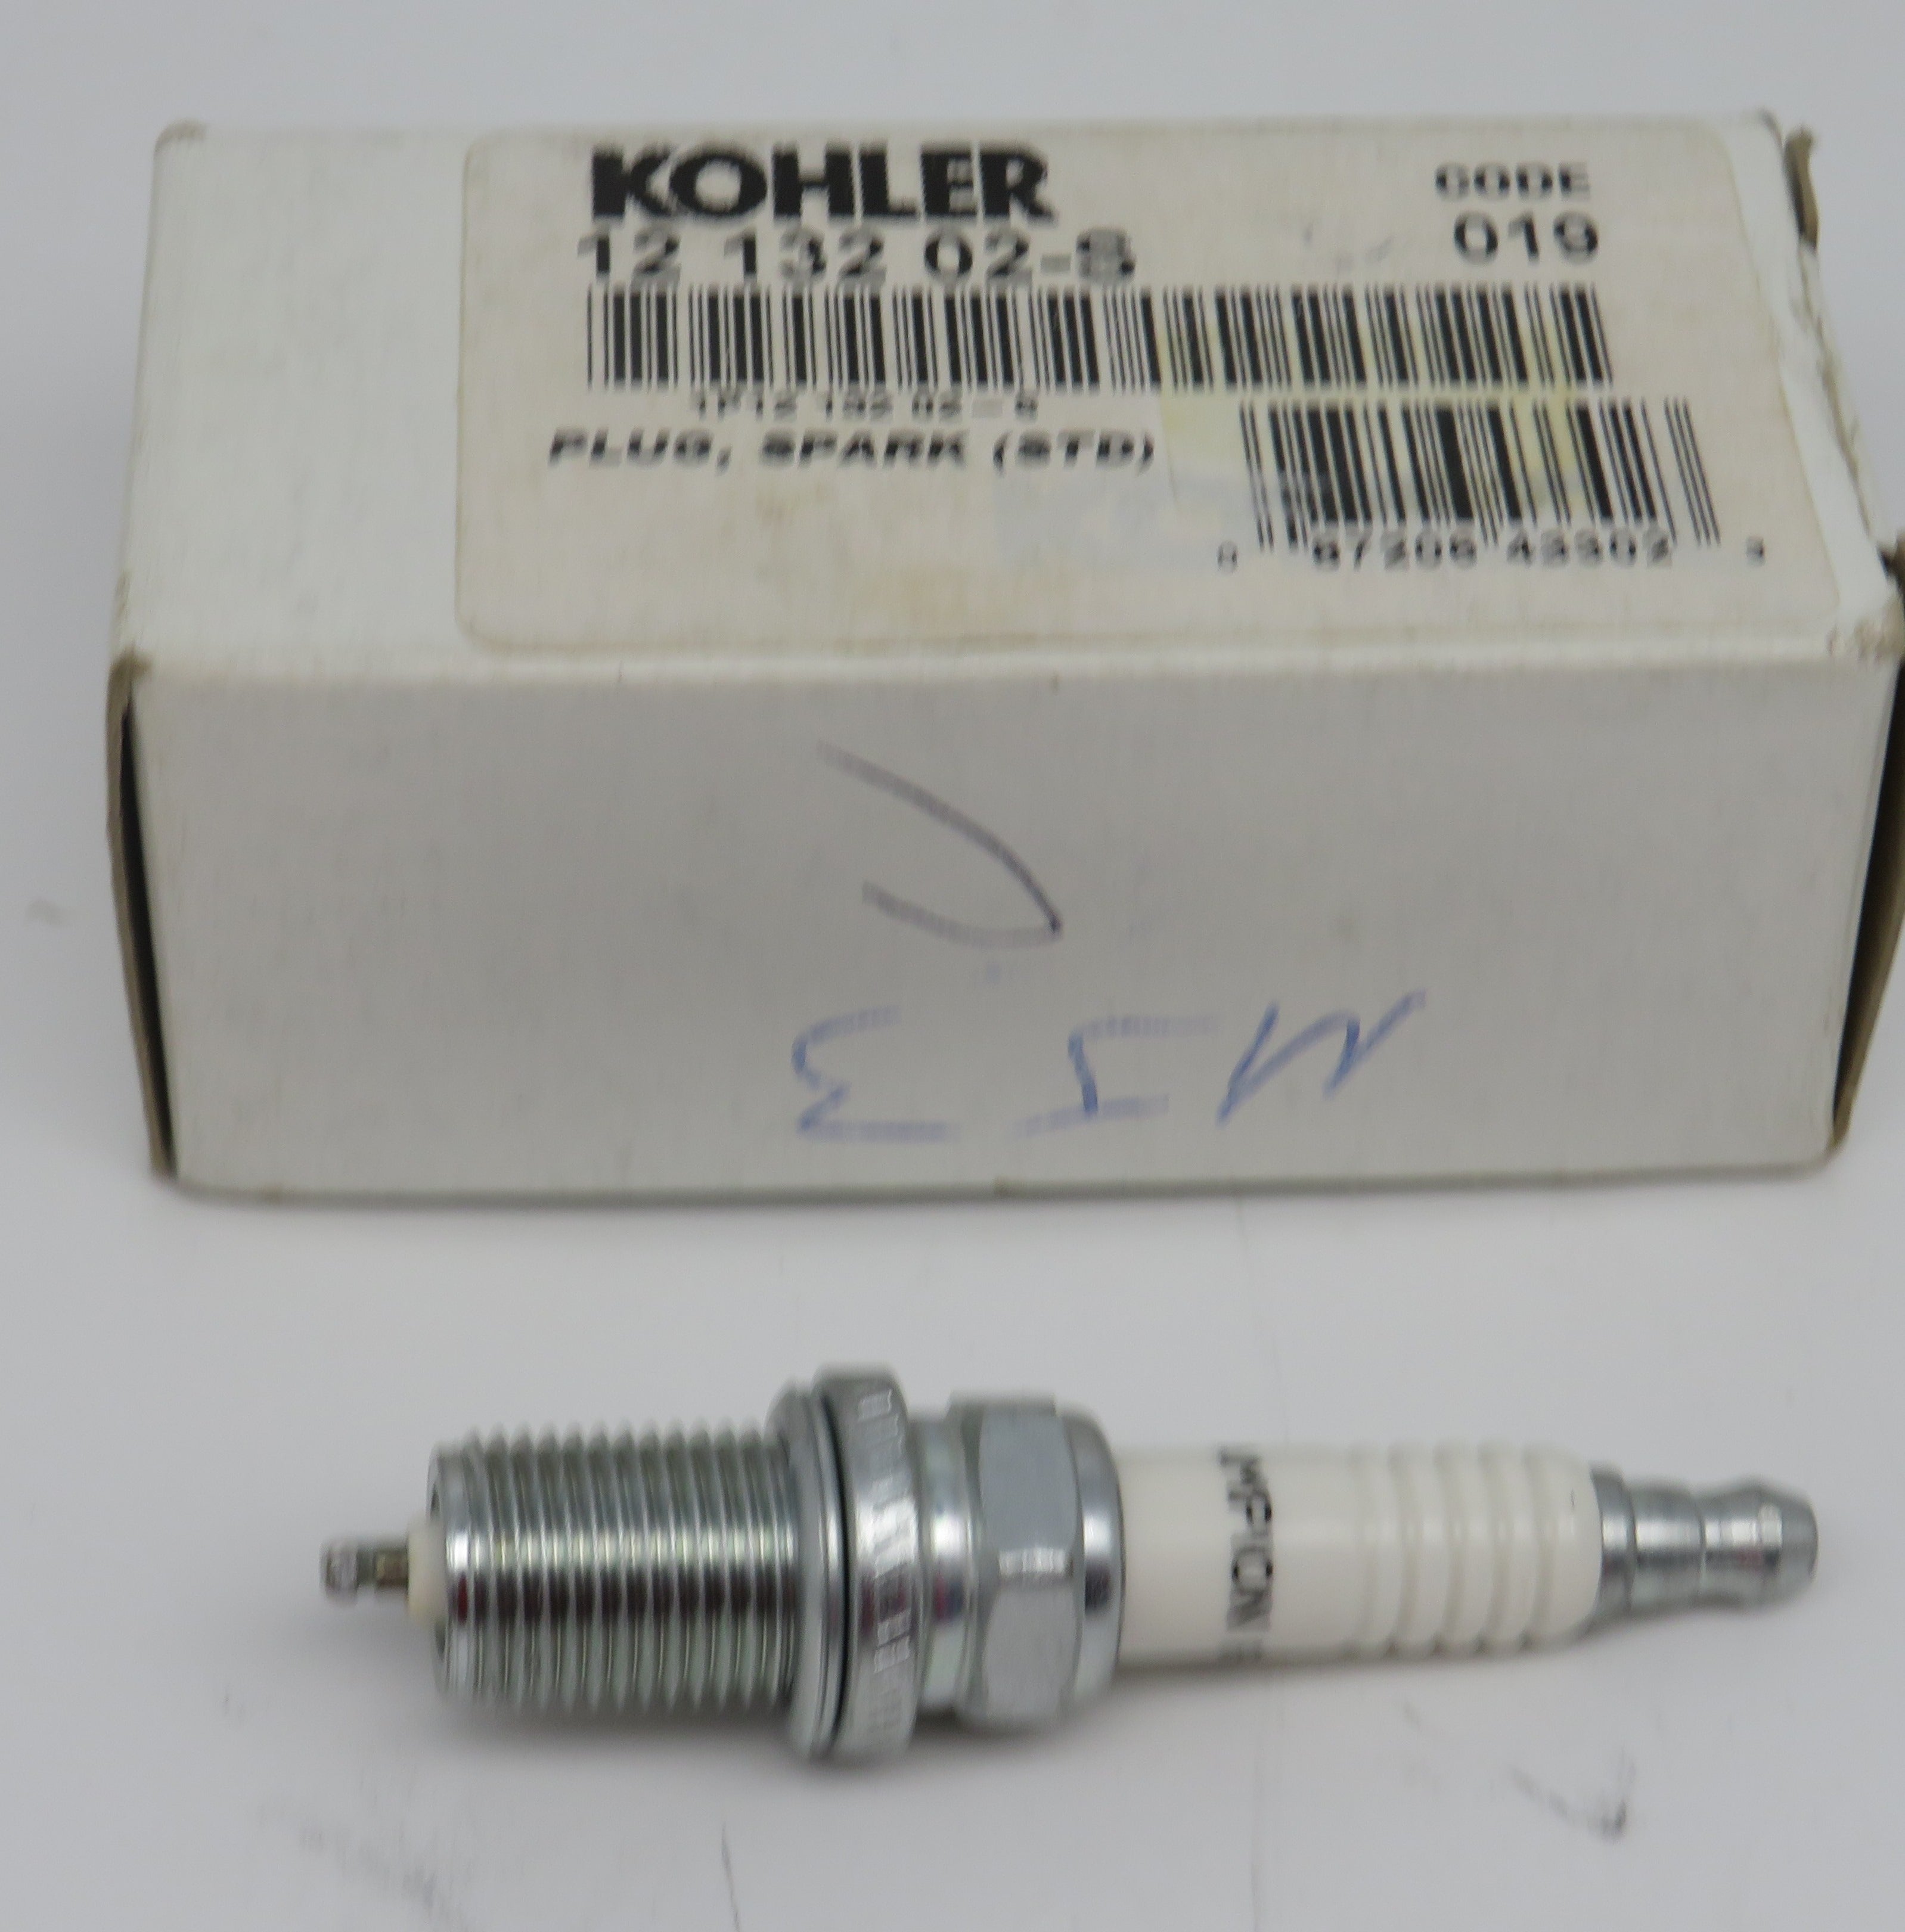 1213202-S Kohler Spark Plug